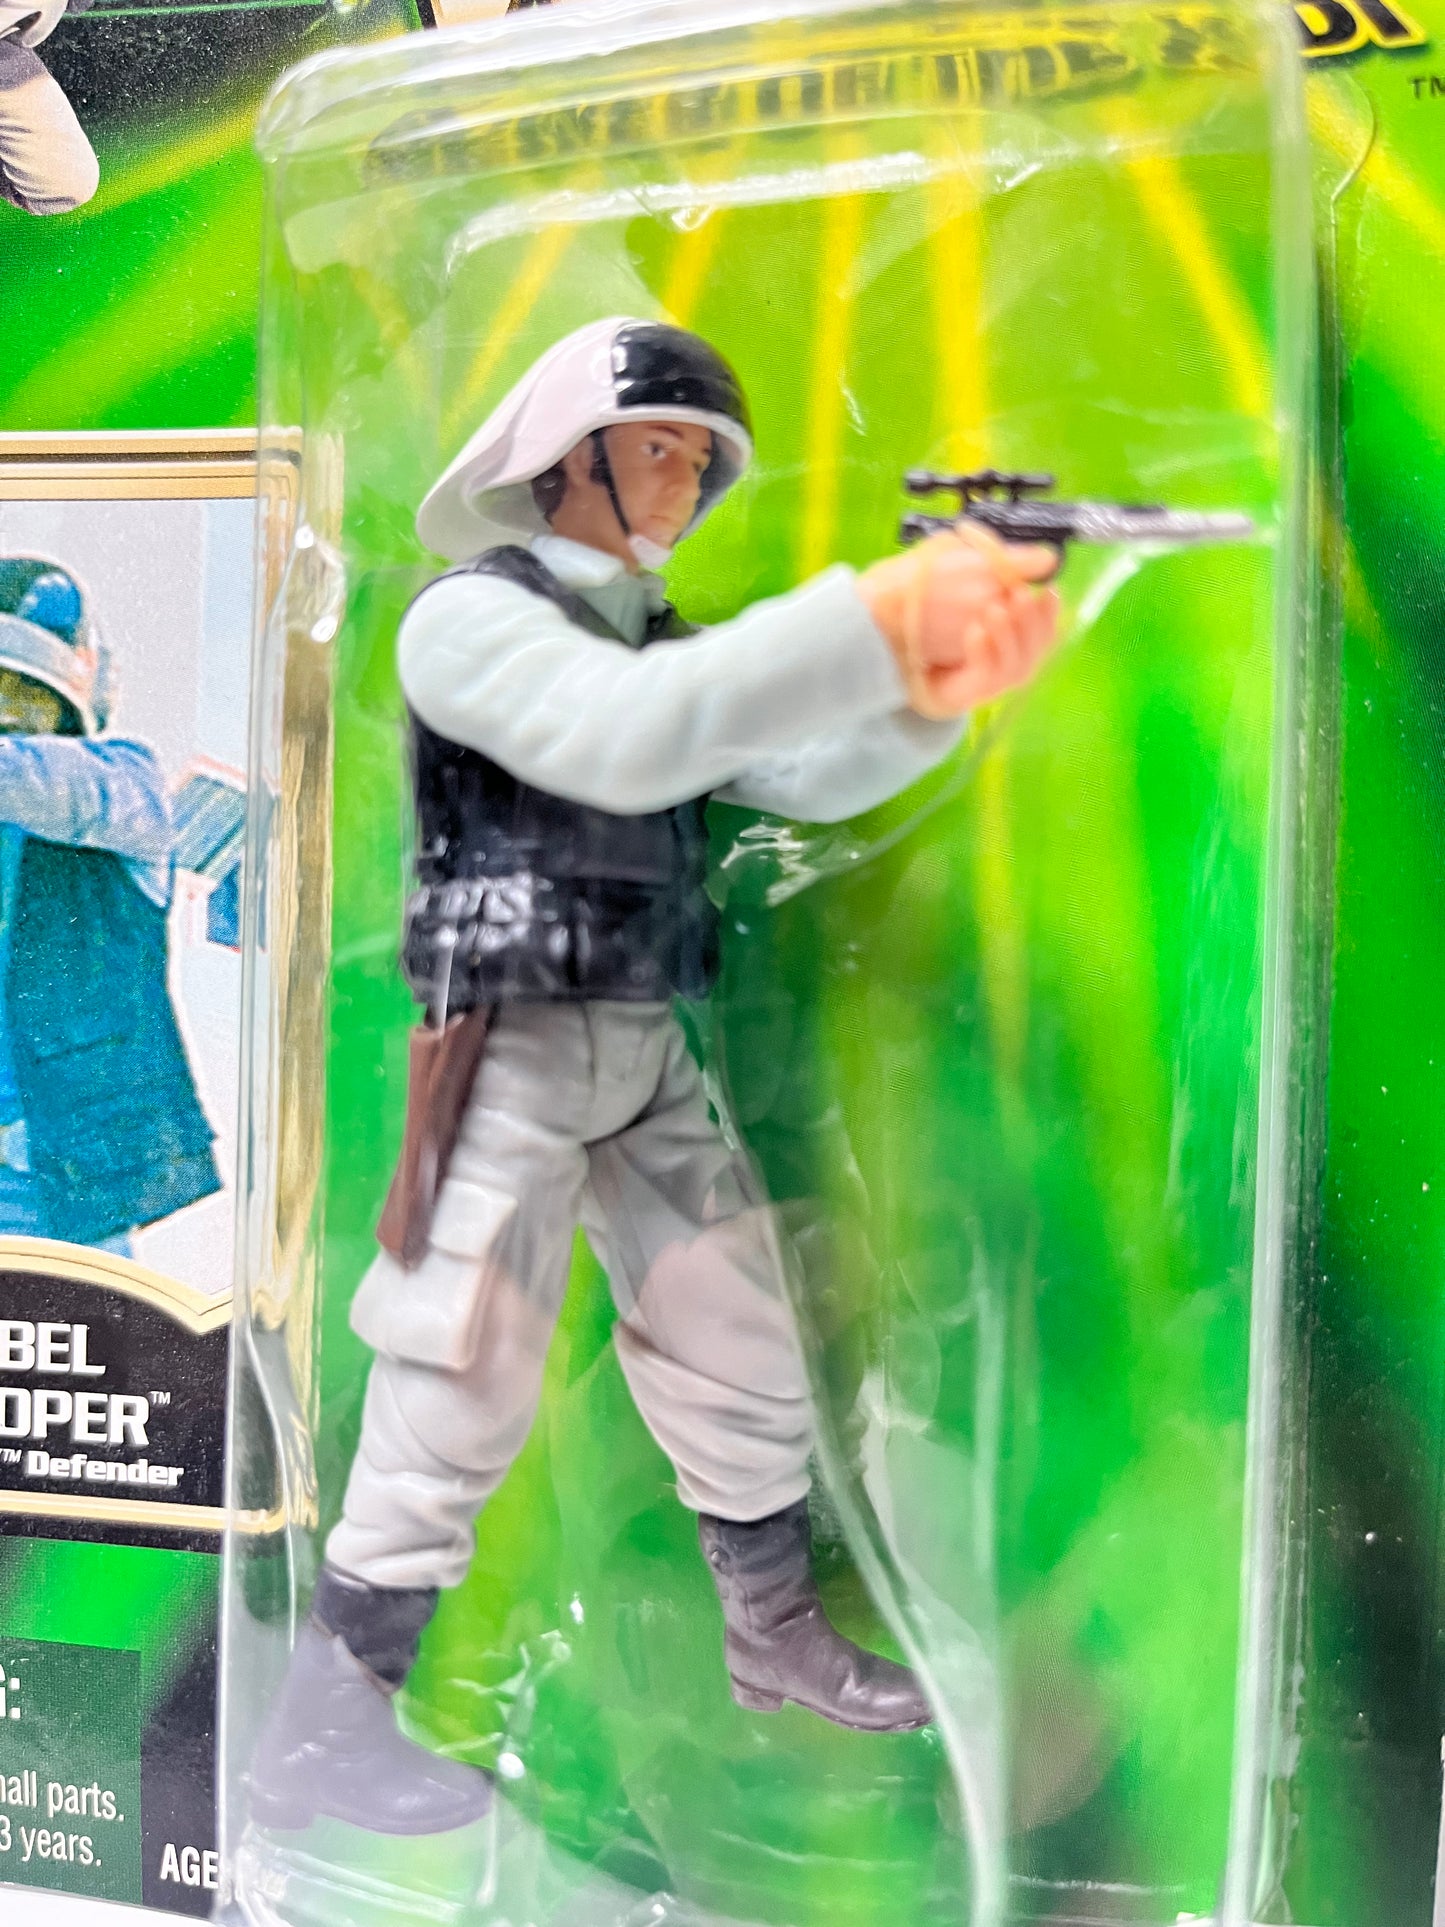 Star Wars Power Of The Jedi Rebel Trooper Action Figure